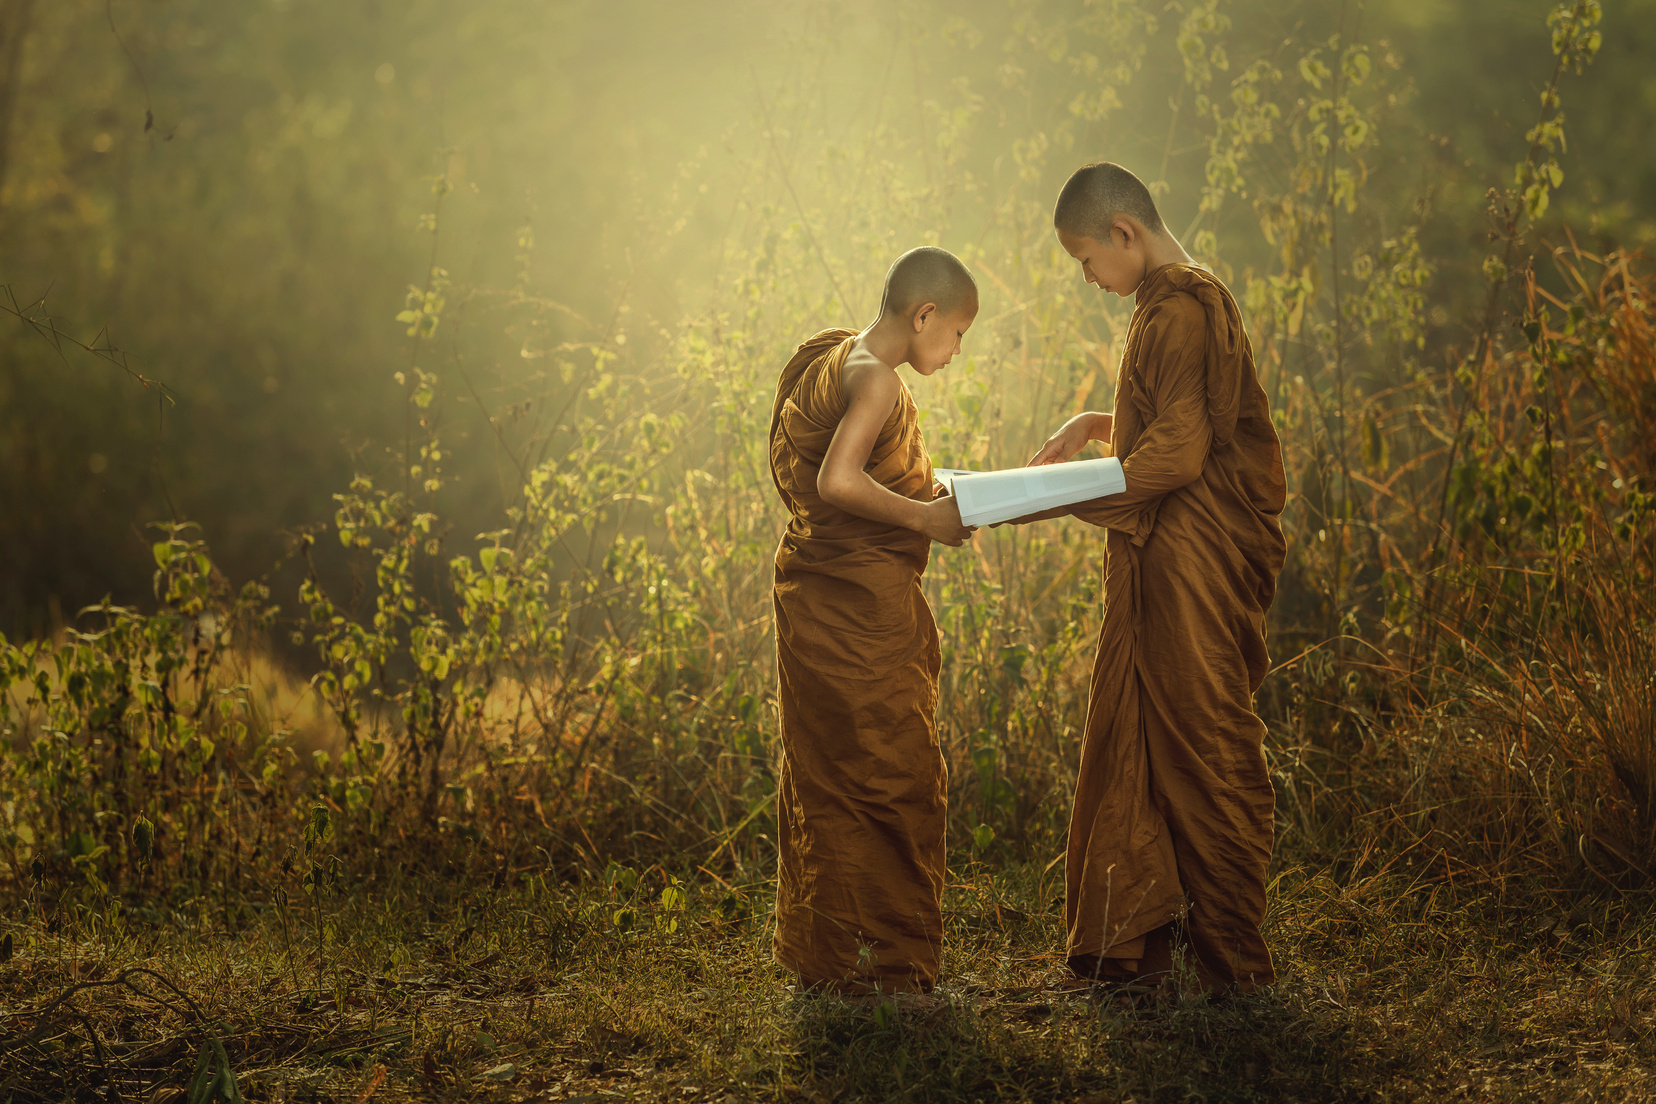 Novice Monk teaching.